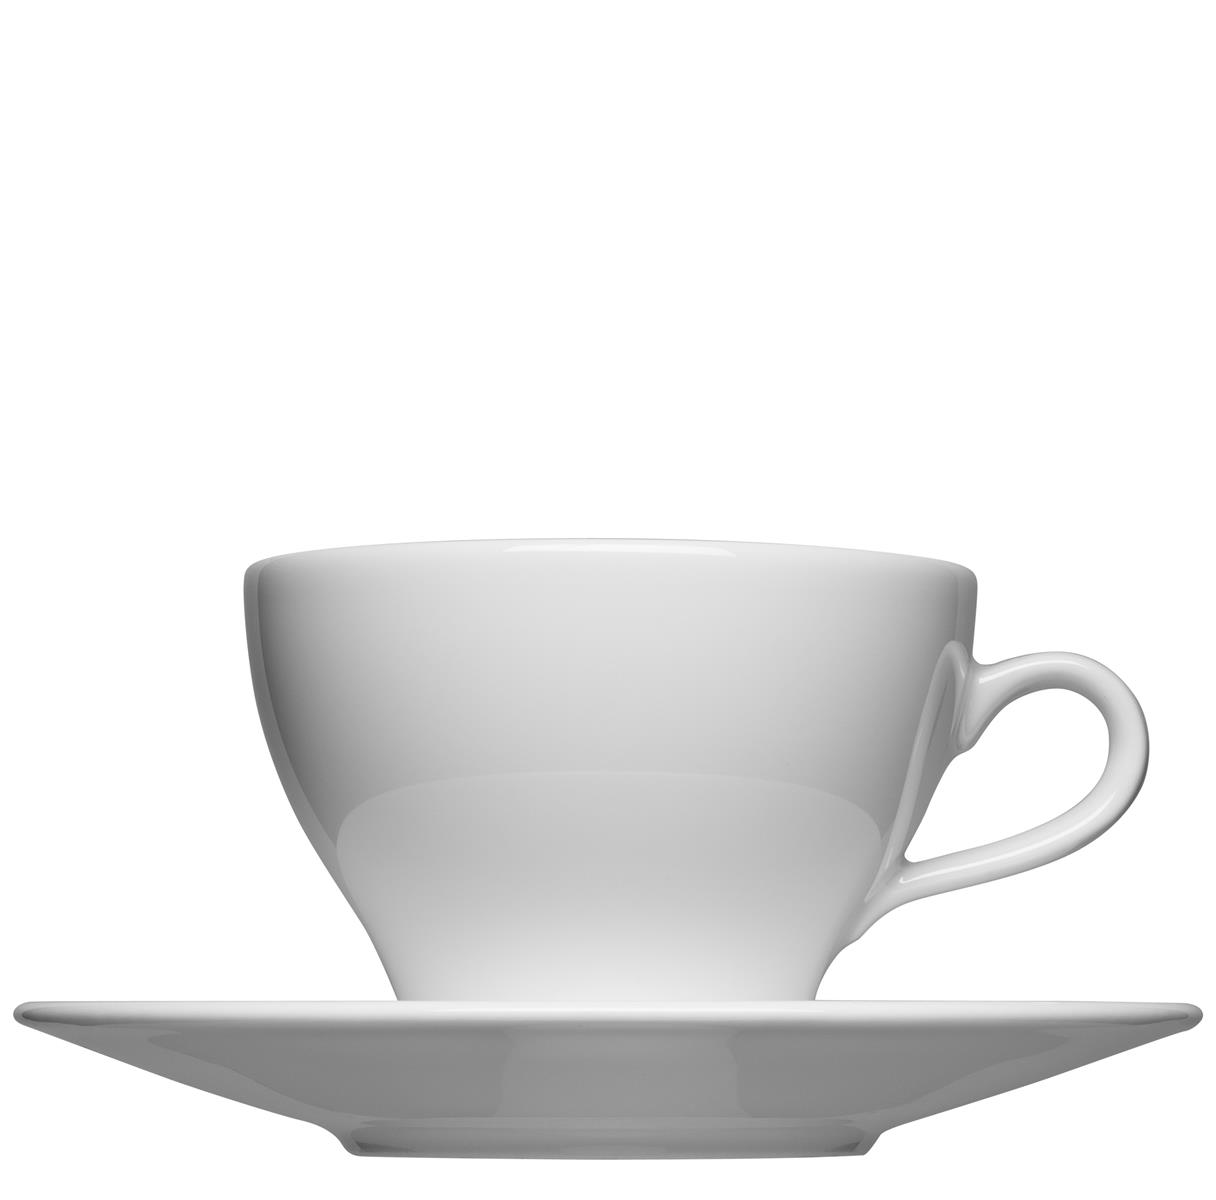 Milchkaffeetasse Form 564